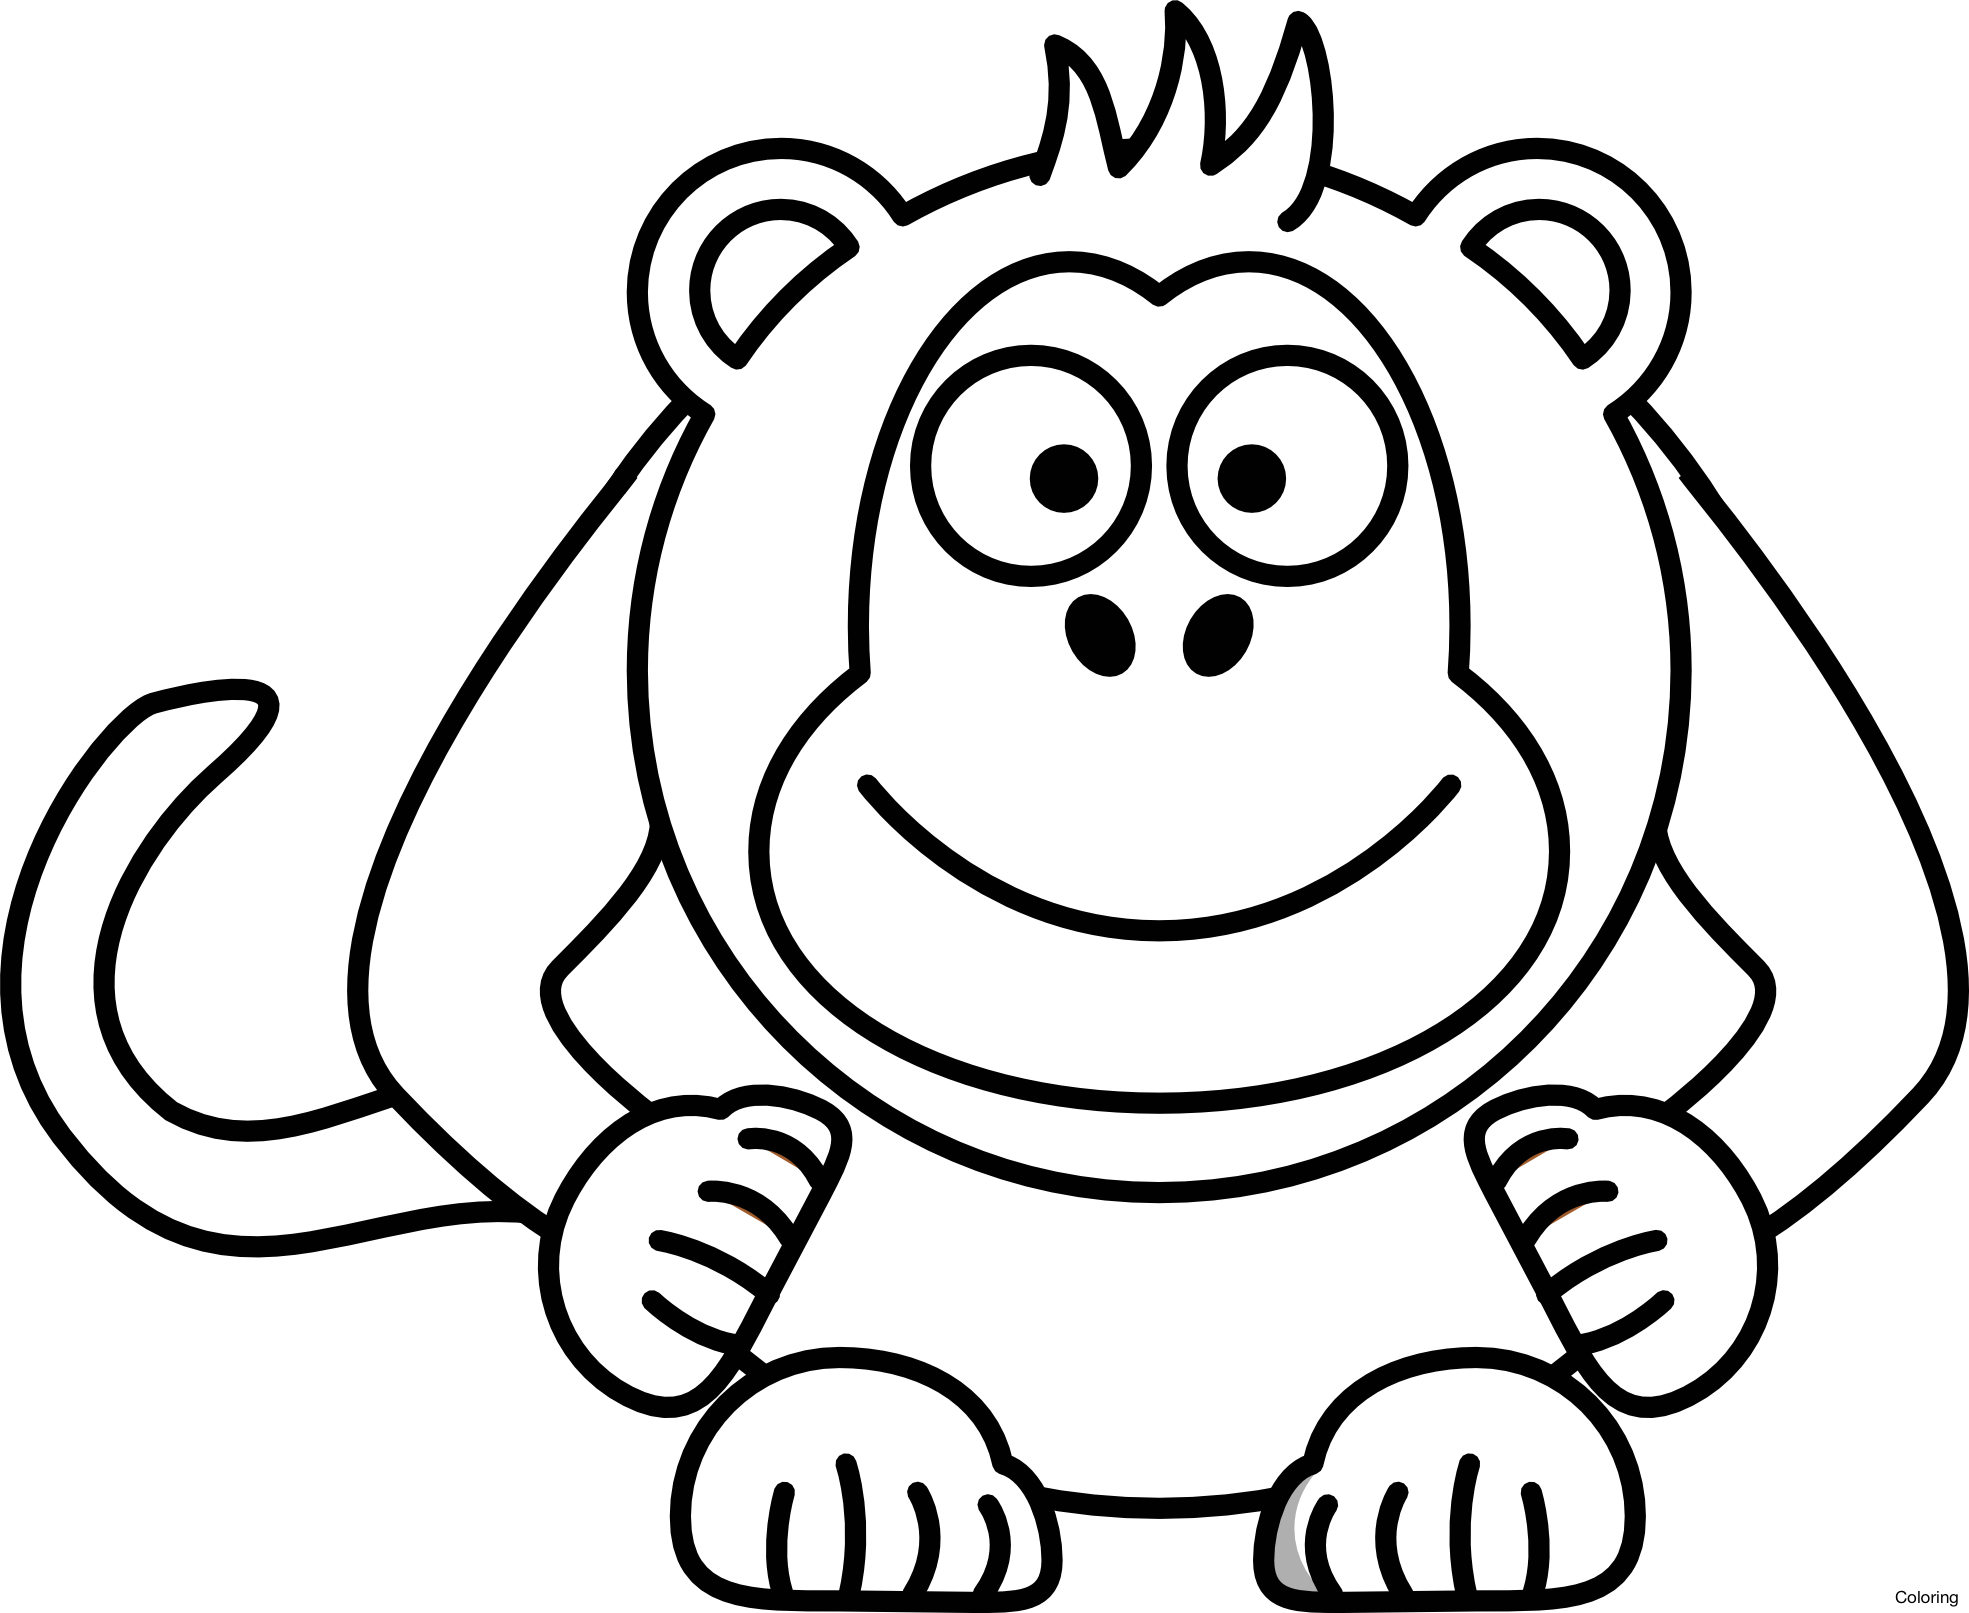 Gorilla clipart simple cartoon. Monkey drawing at getdrawings